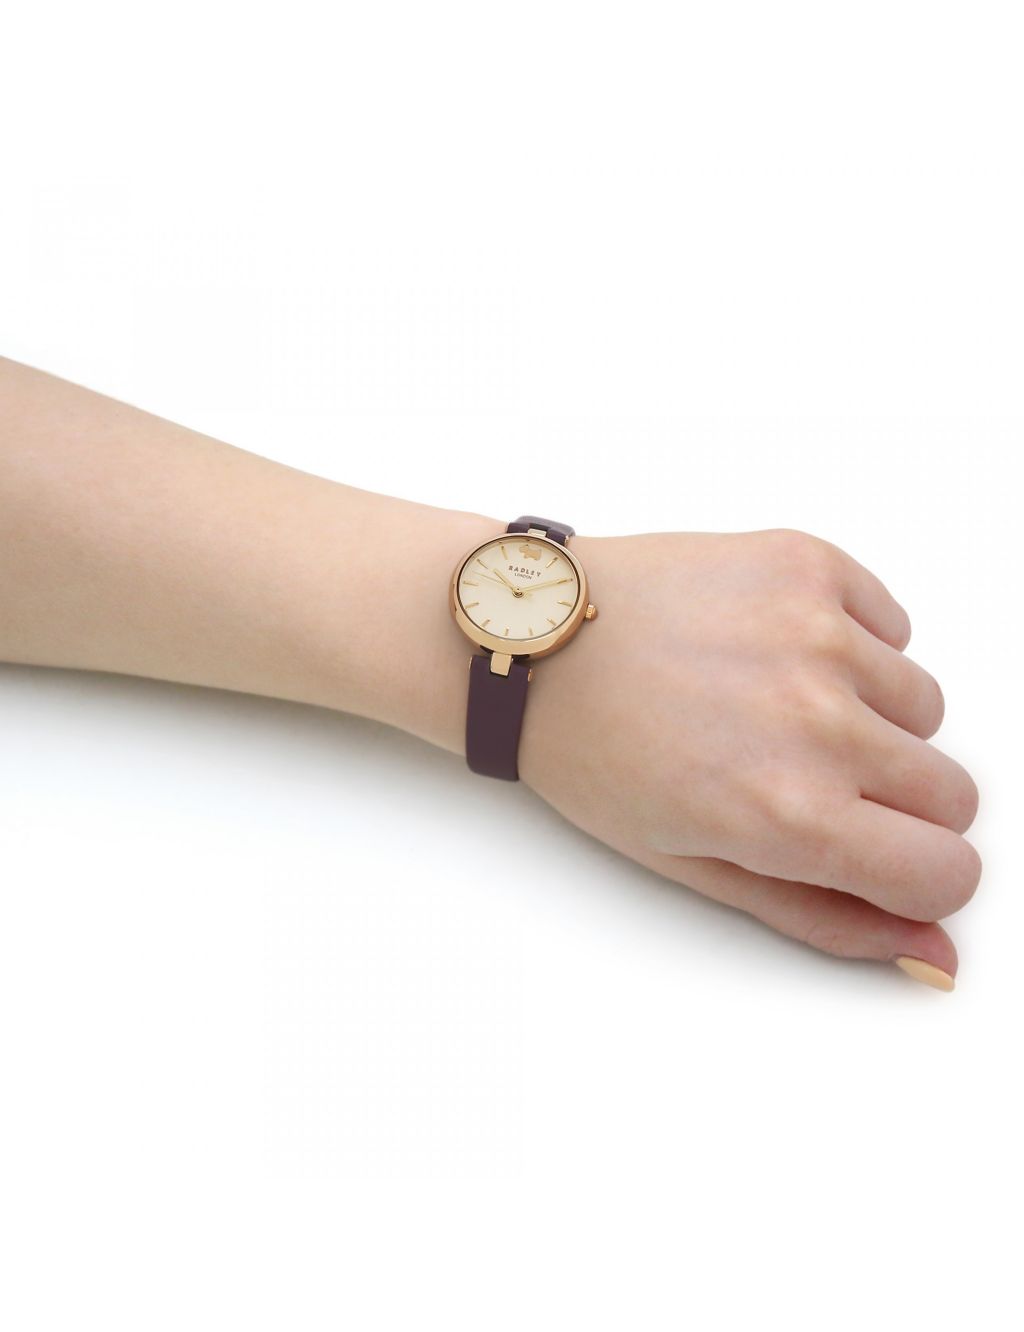 Radley Scottie Dog Purple Leather Watch image 2